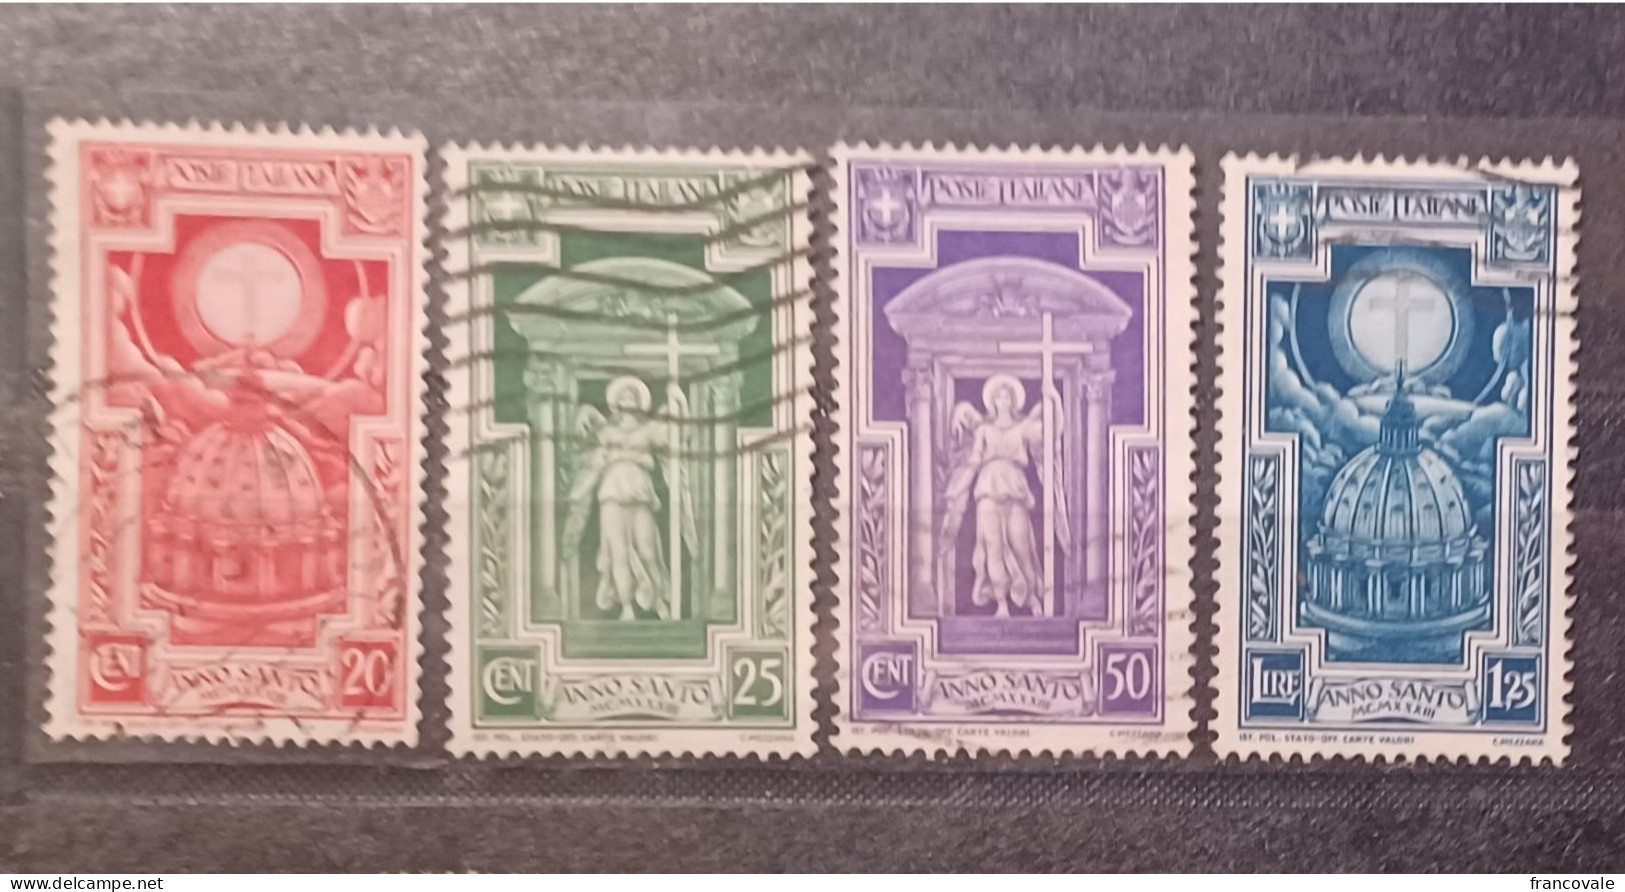 Regno 1933 (Sas.345-348) Anno Santo Serie 4 Valori Usati - Usados